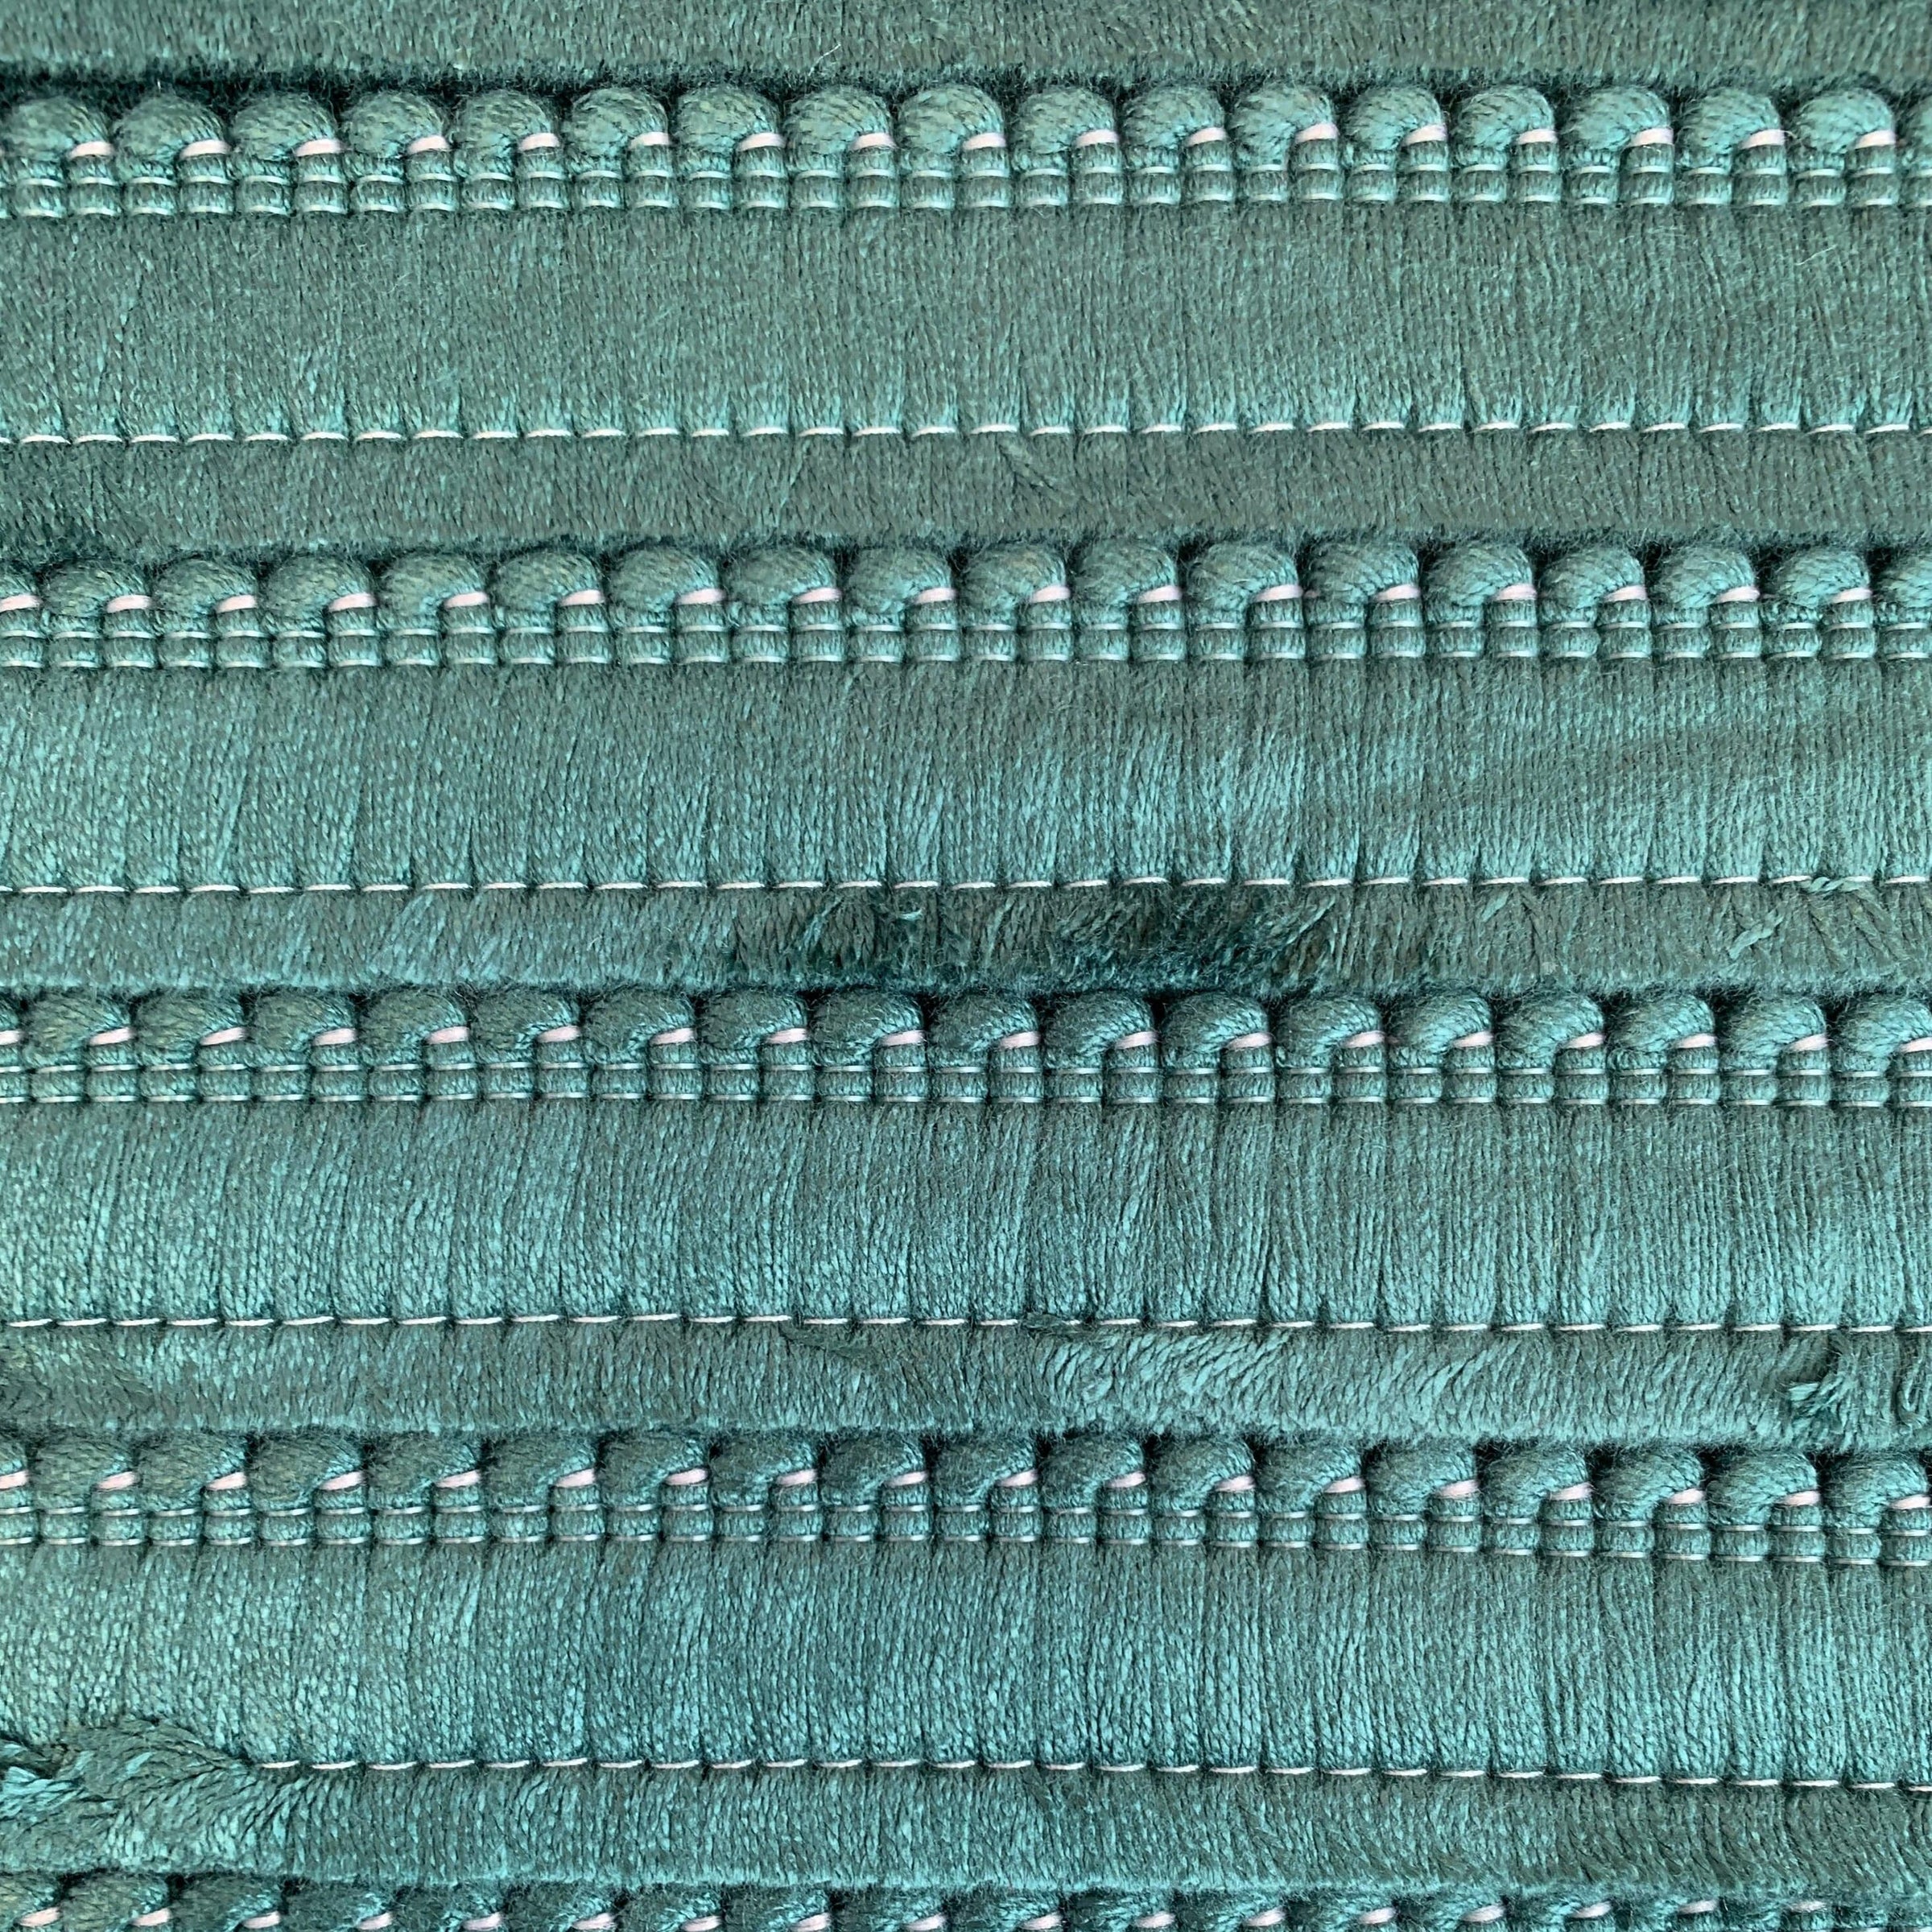 A close up of an emerald green cushion fringe.